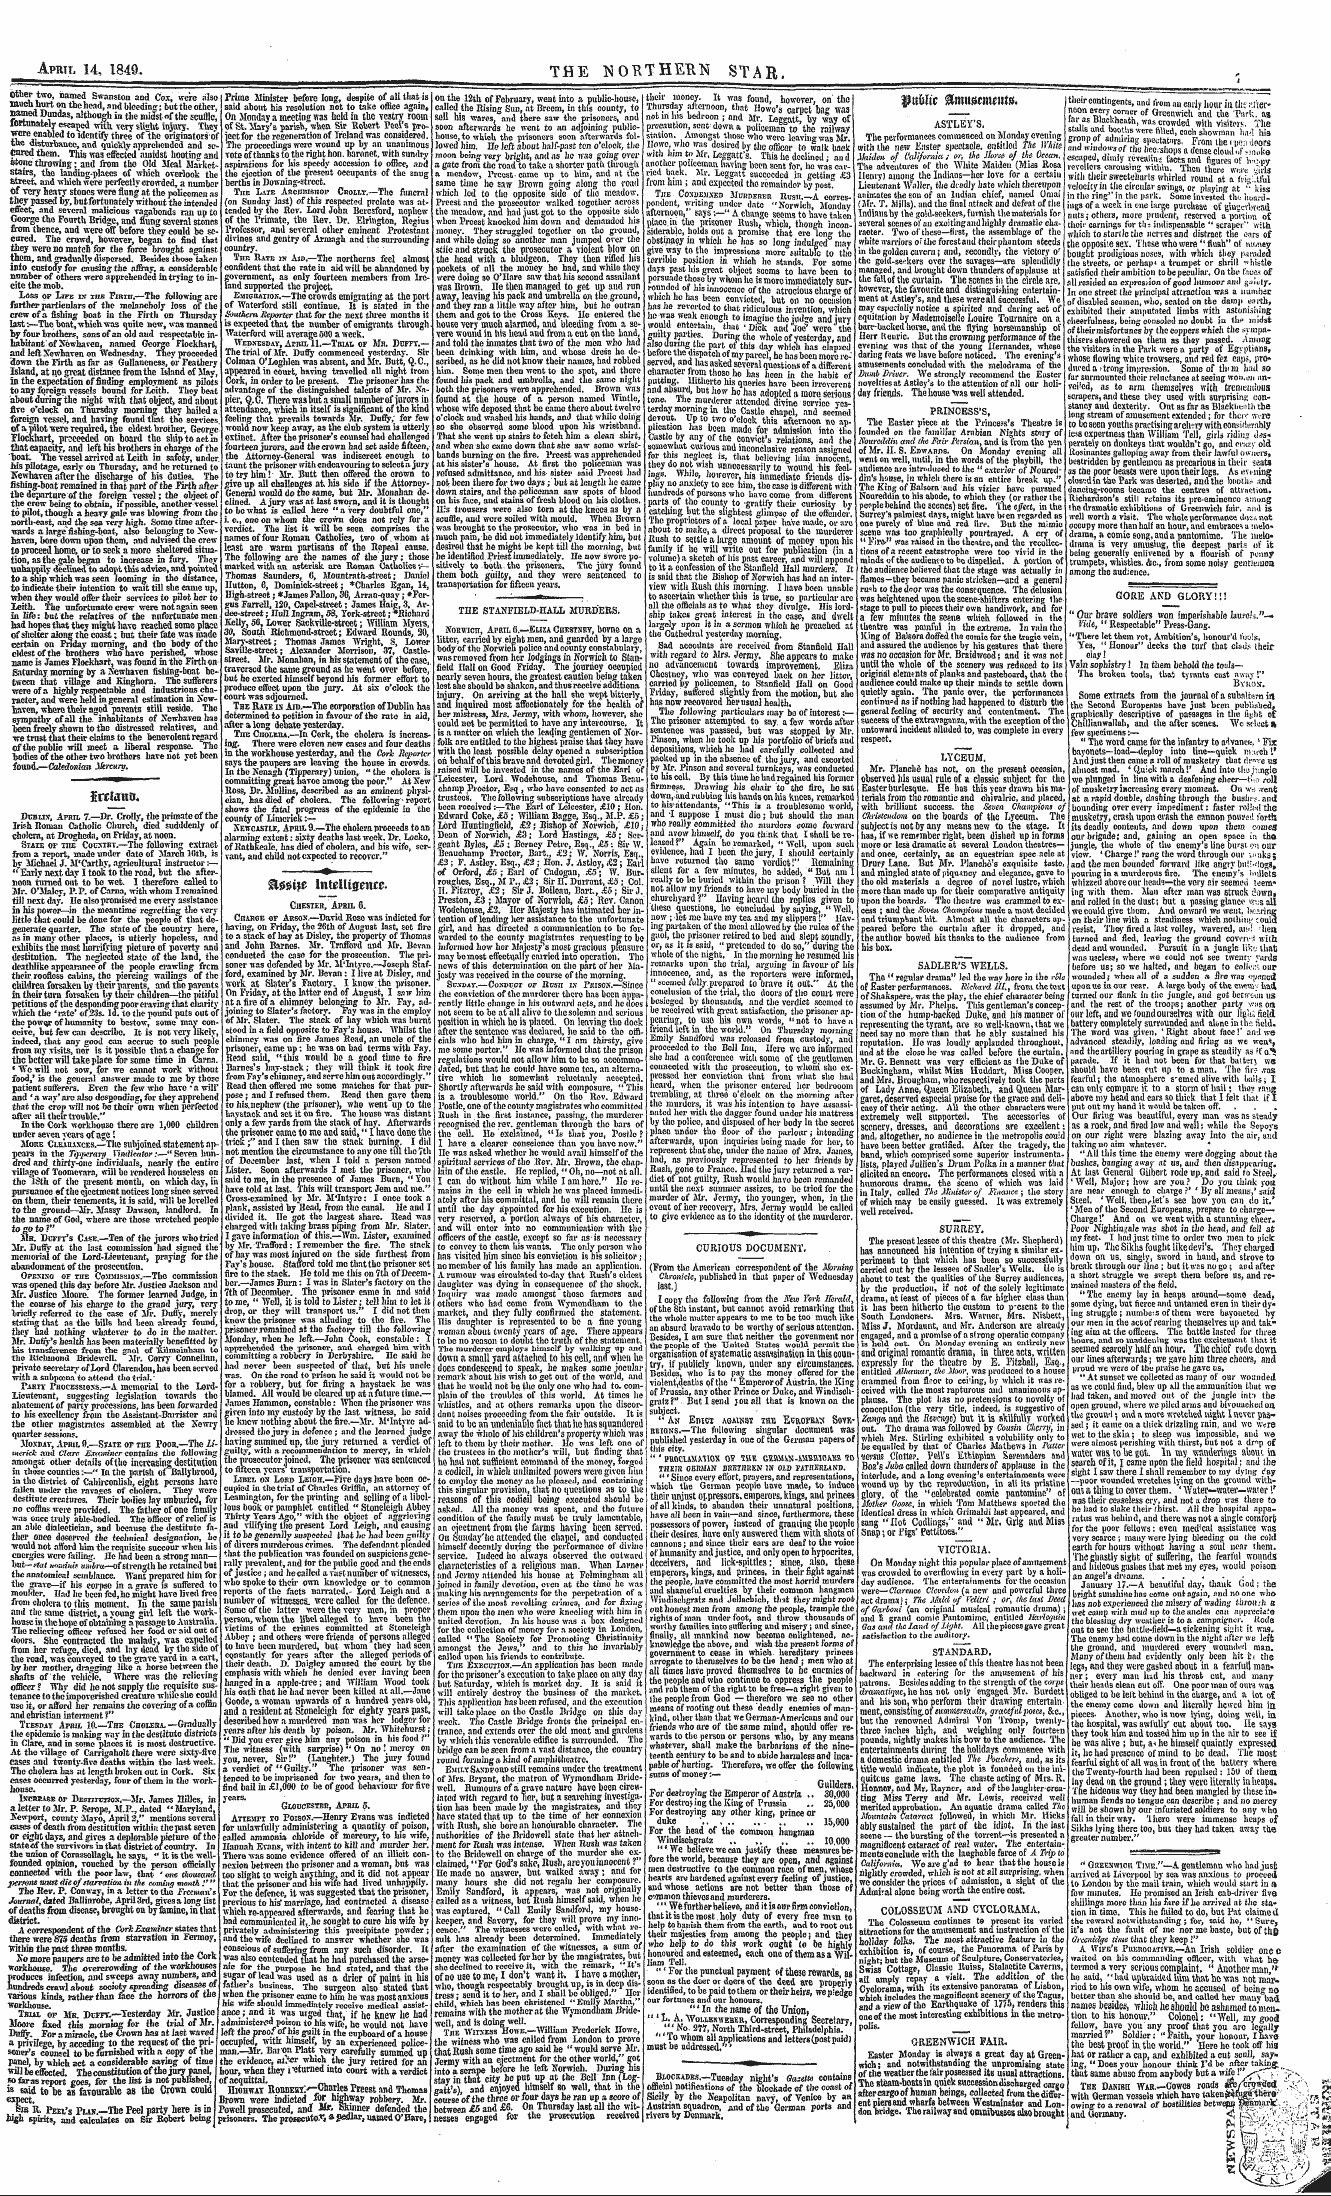 Northern Star (1837-1852): jS F Y, 3rd edition - Blockades. —Tuesday Ni Ght's Gazette Con...